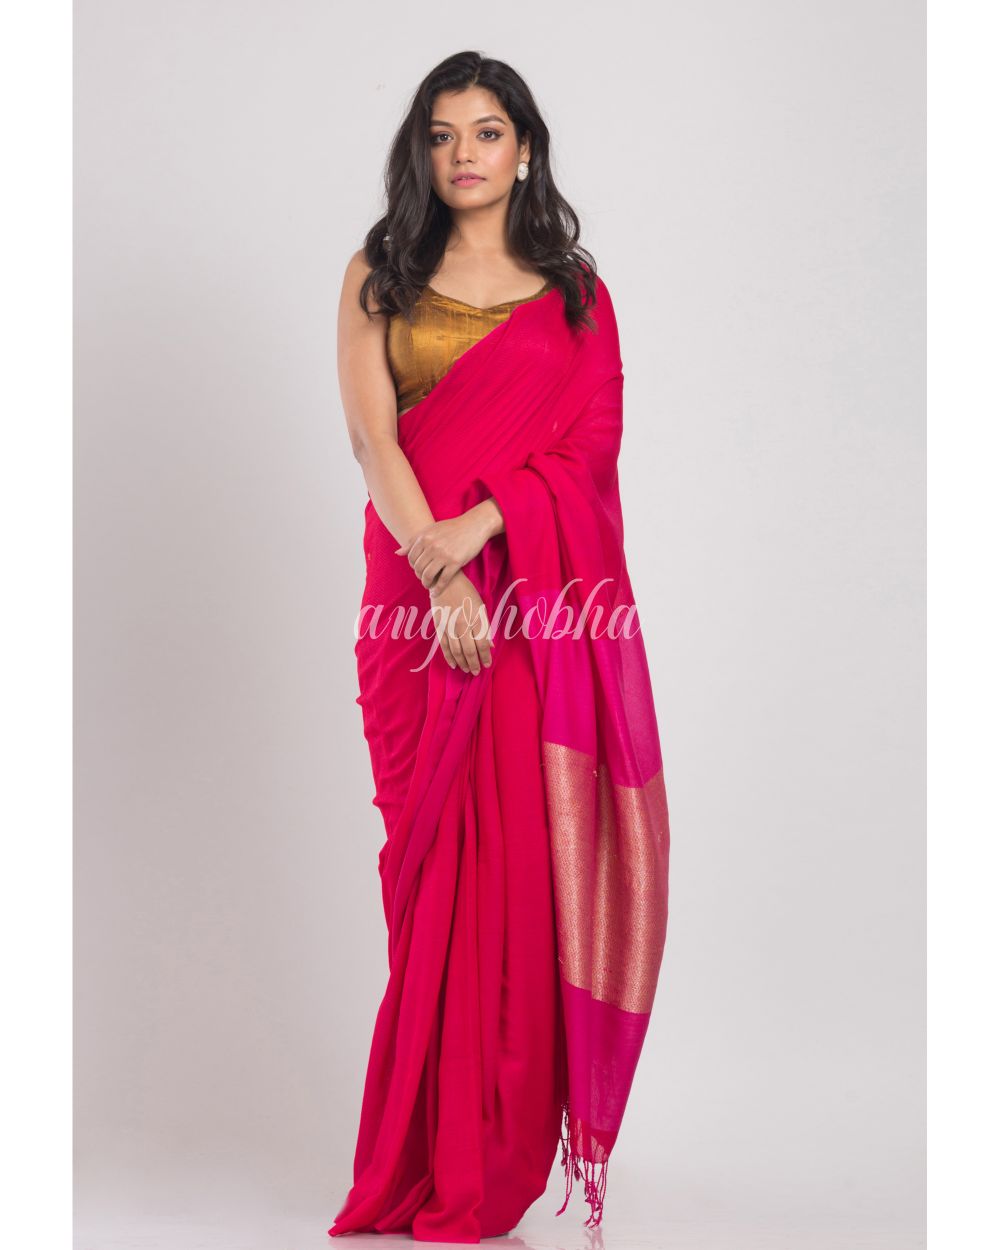 Red Handwoven Cotton Saree angoshobha